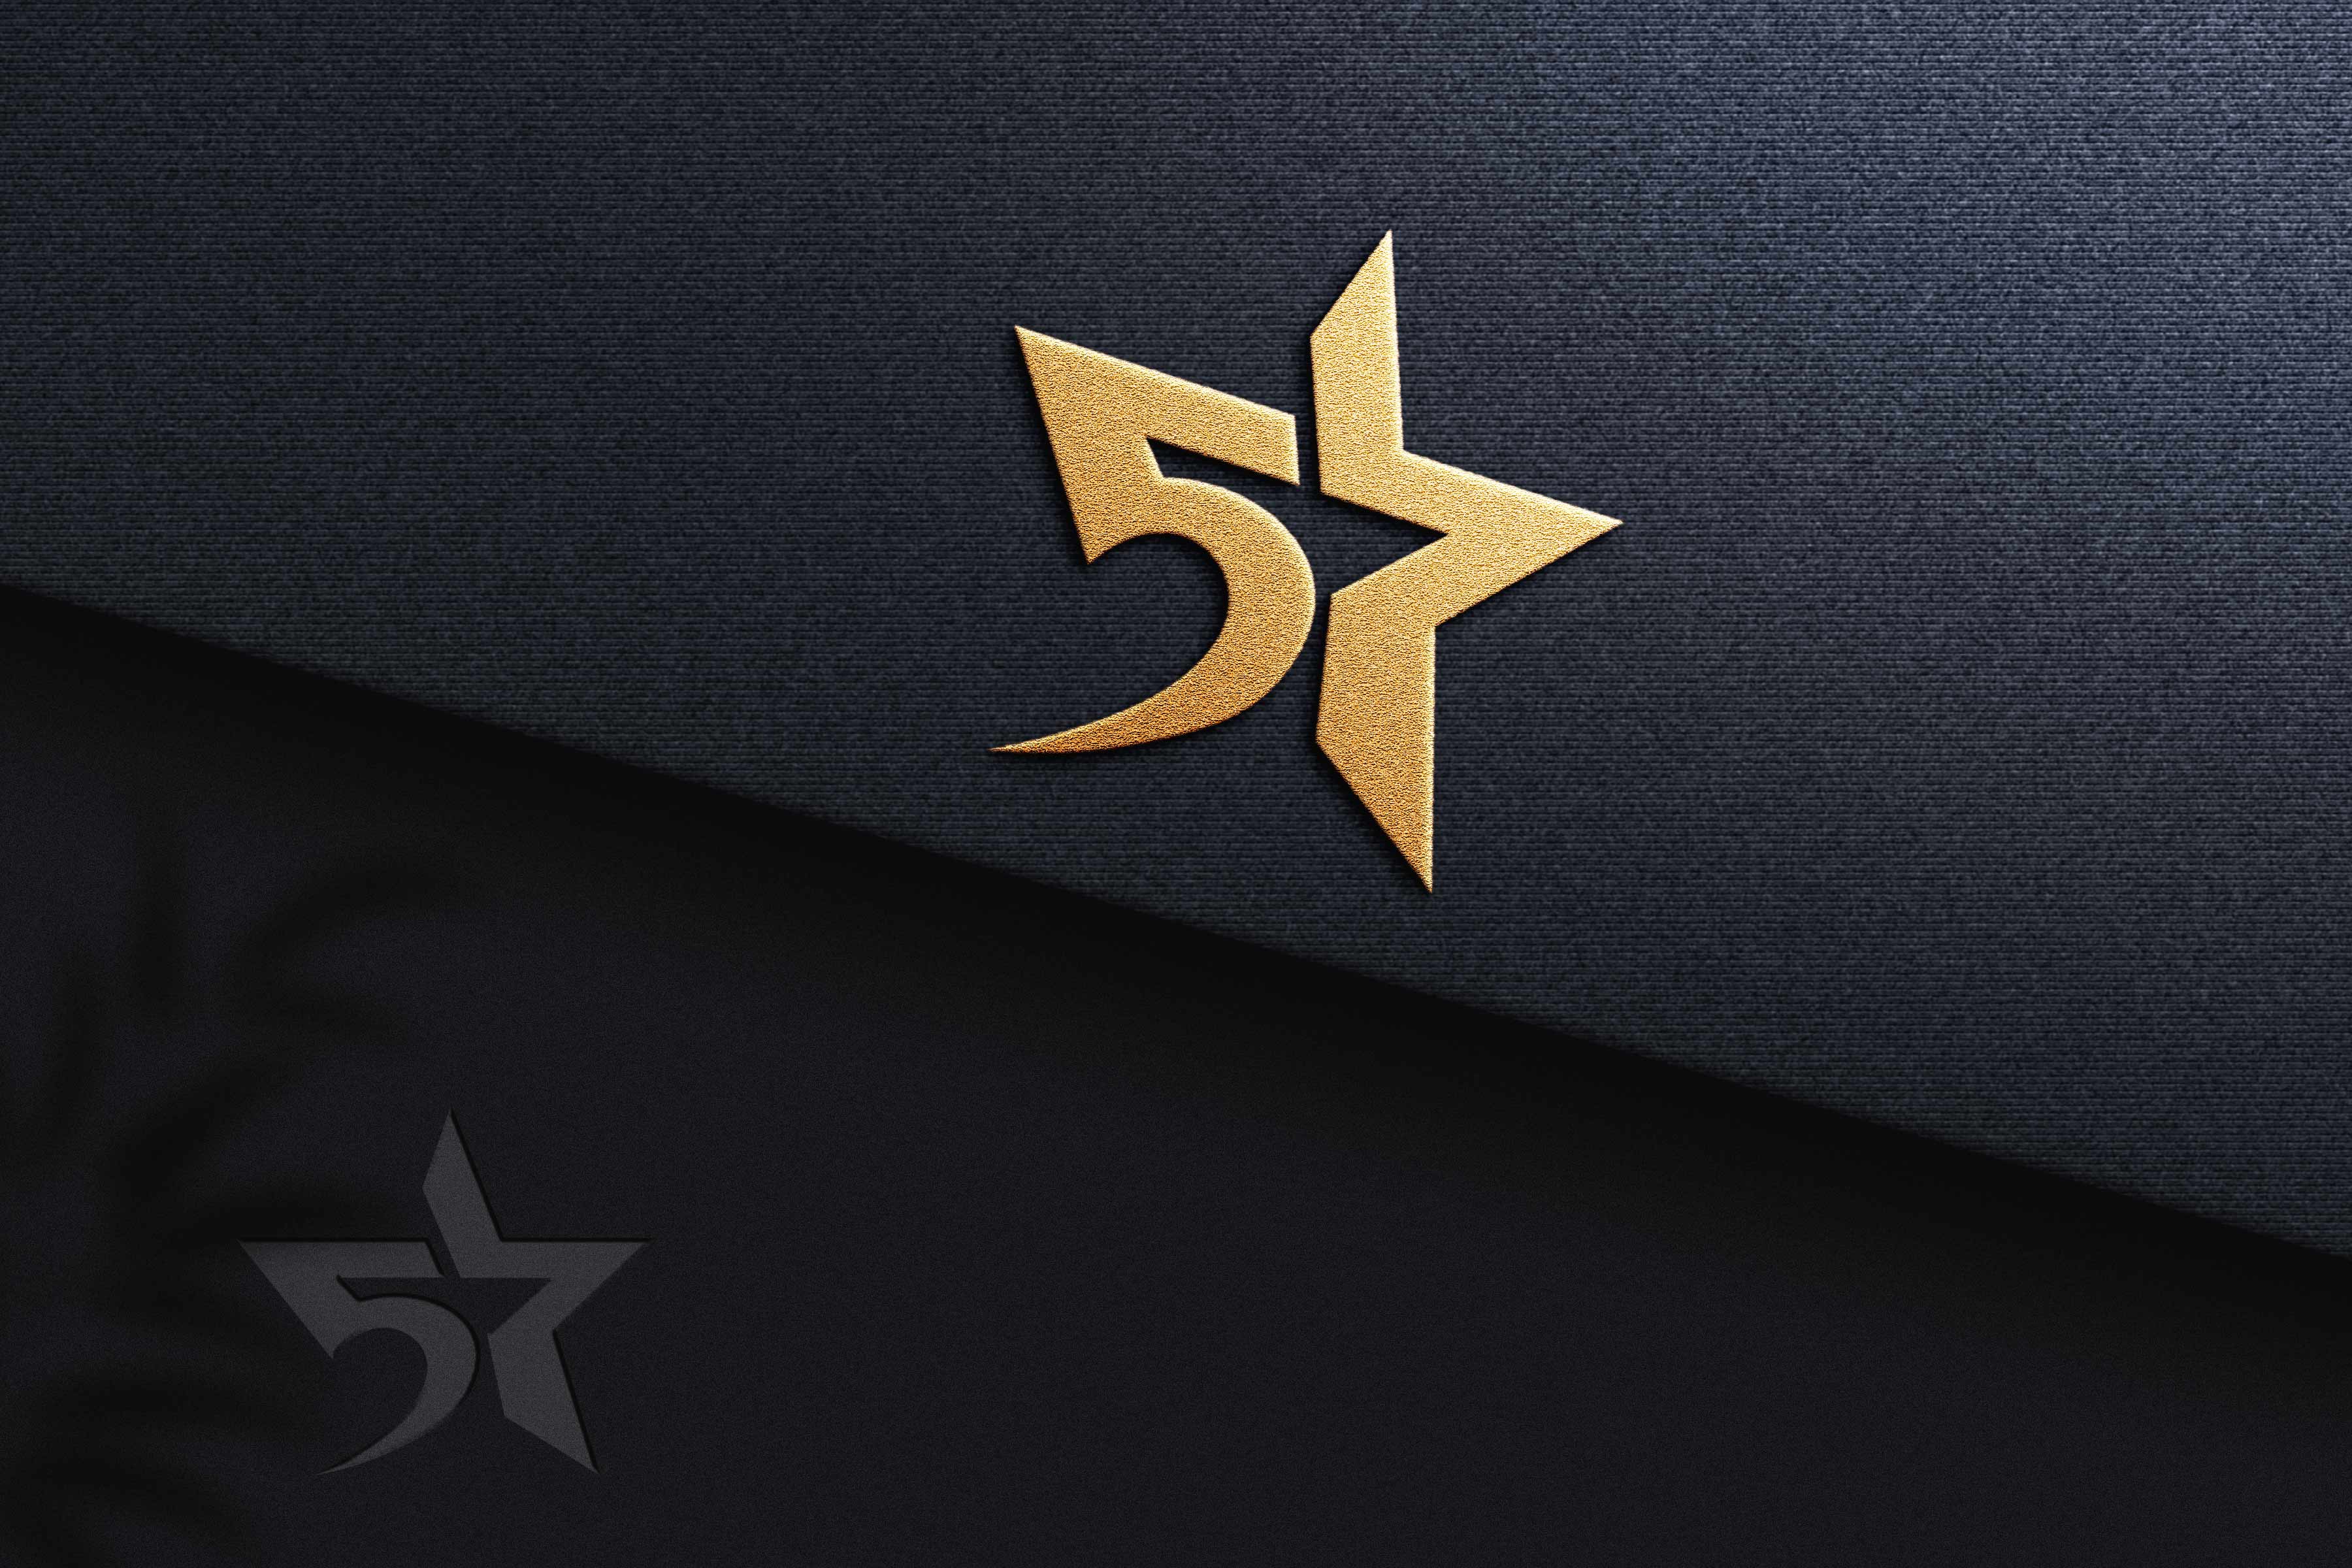 Gold star logo on a black background.